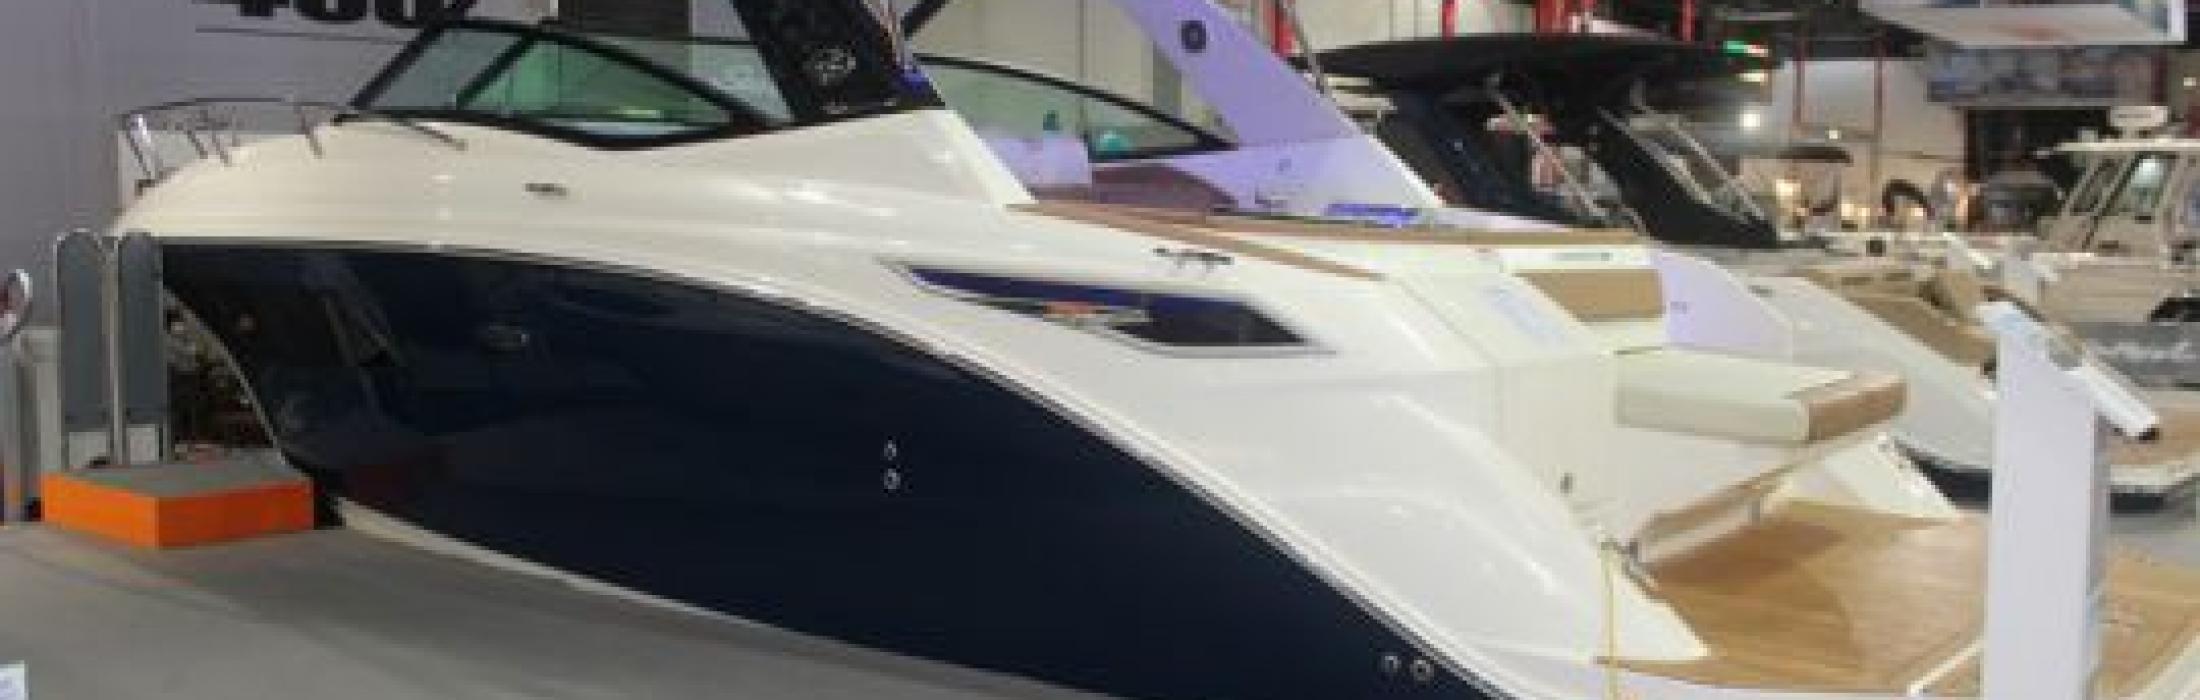 Sea Ray Sundancer 320 : the new hybrid sport cruiser